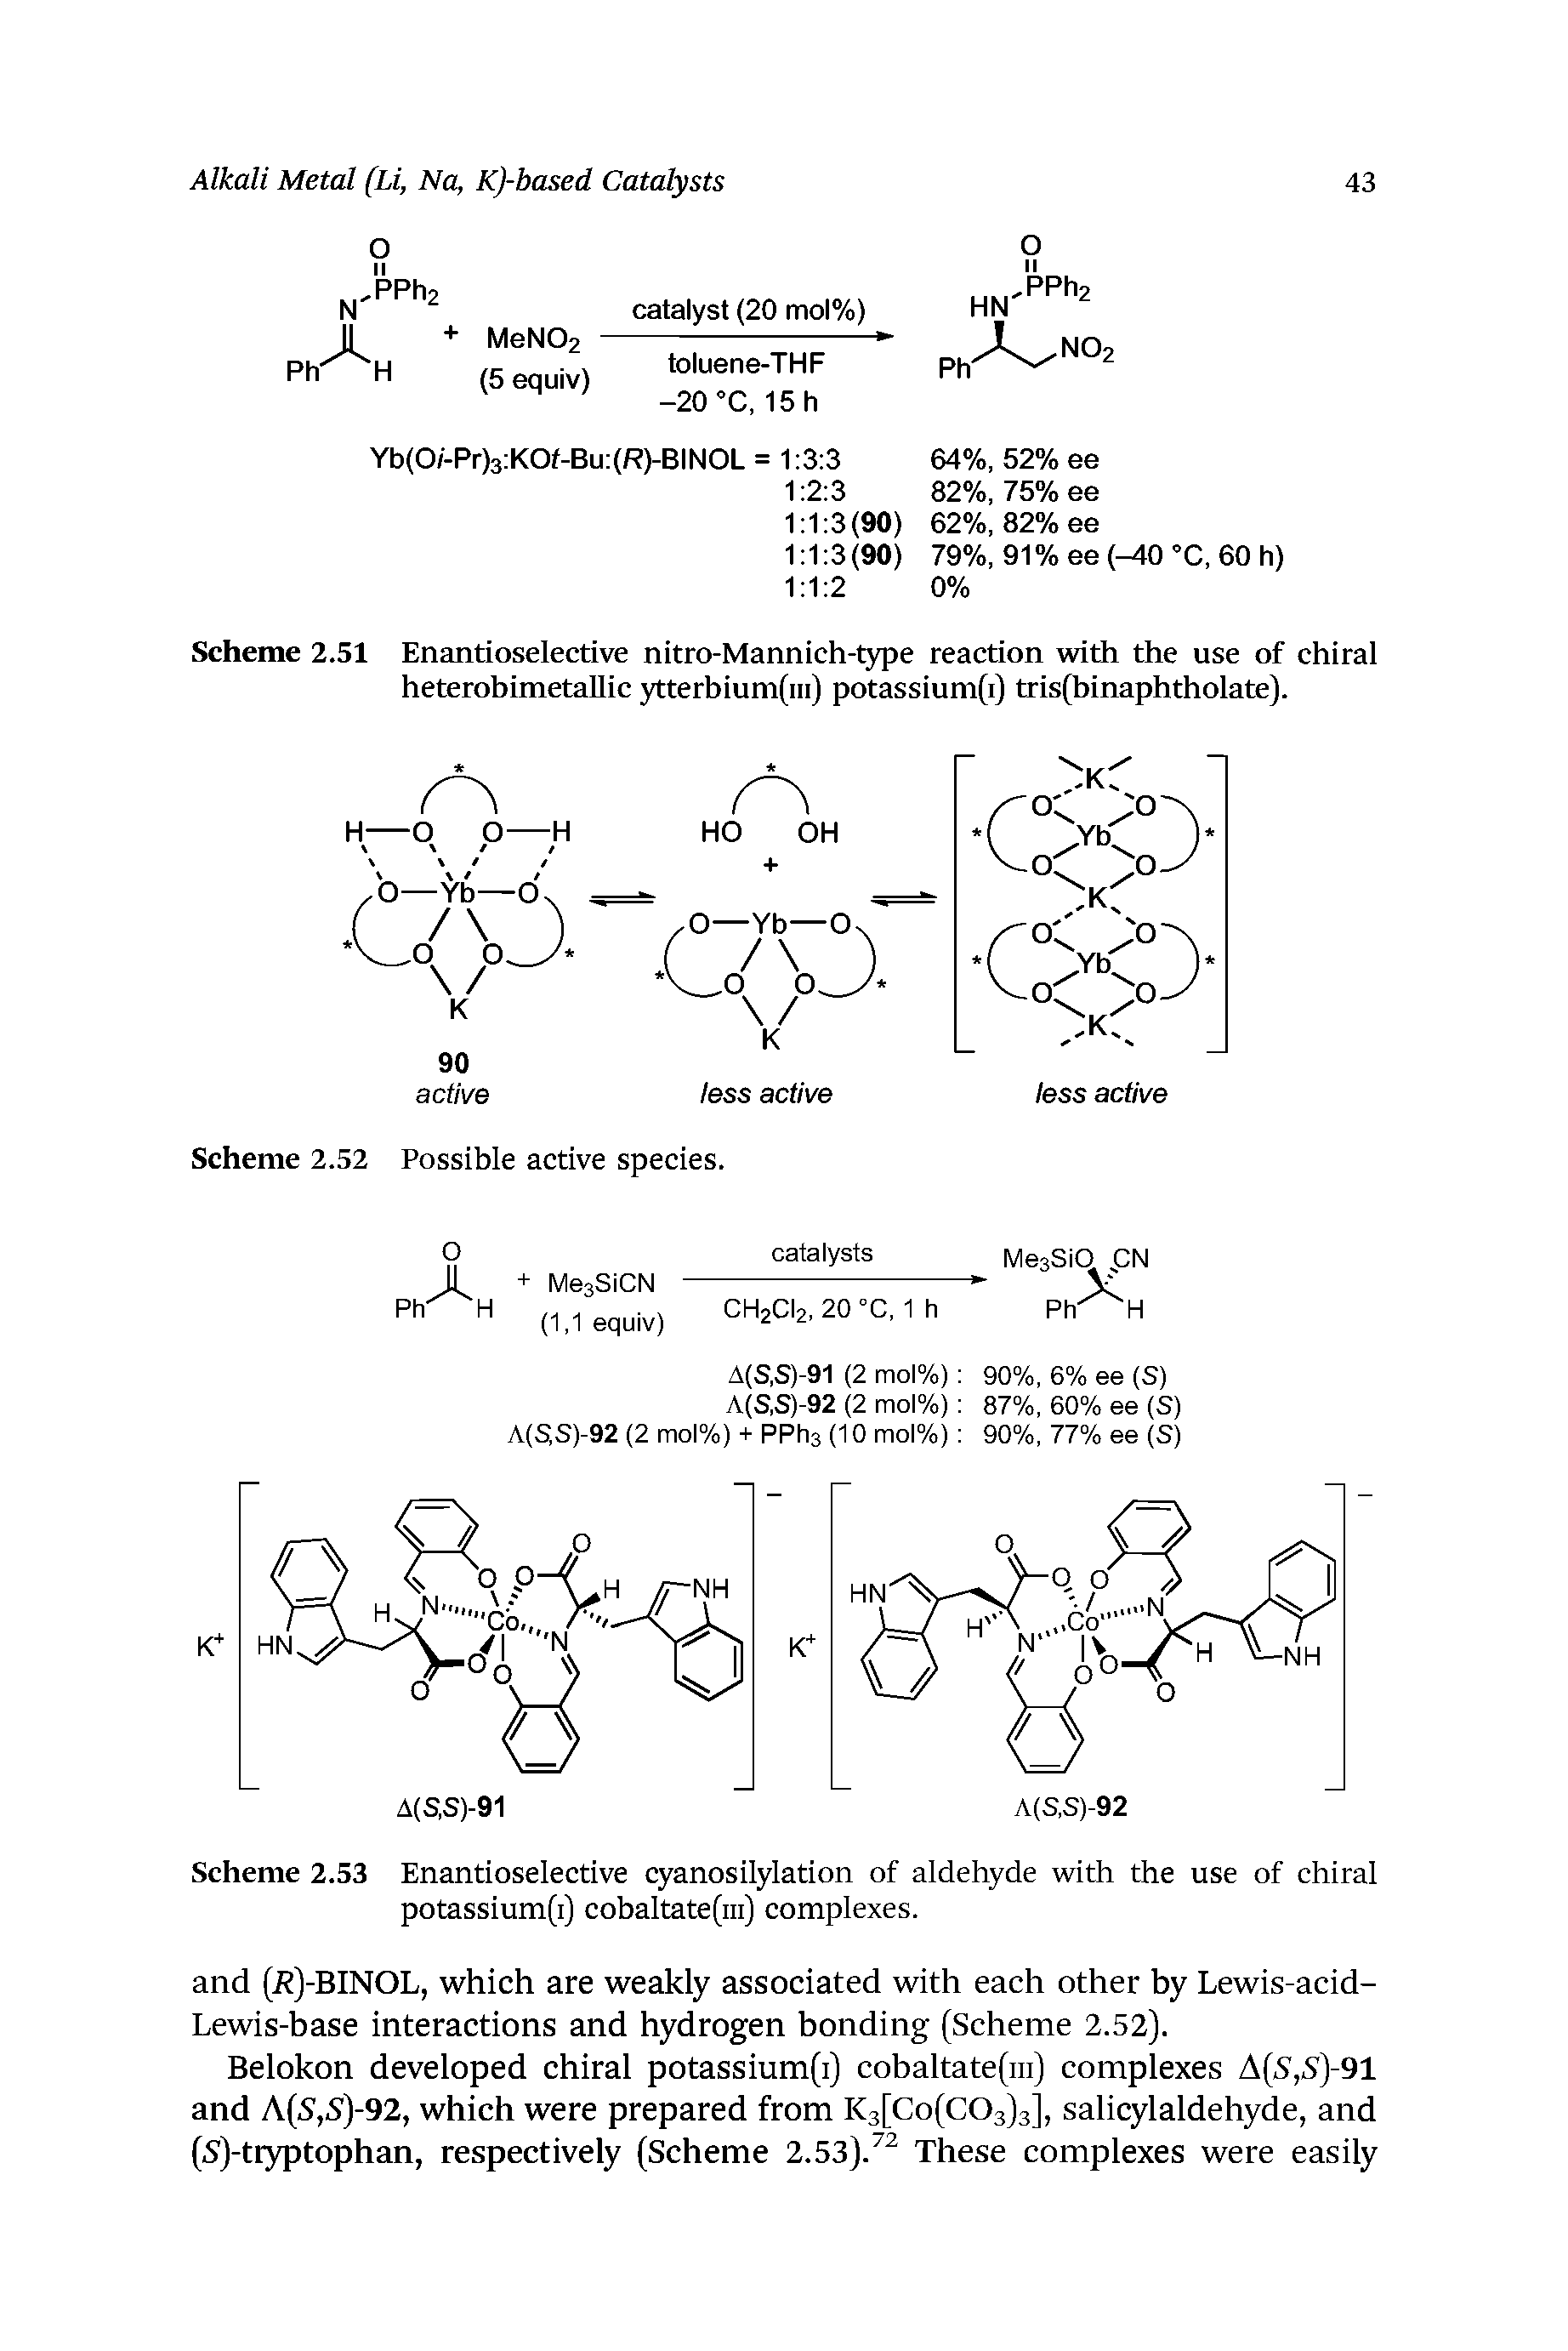 Scheme 2.51 Enantioselective nitro-Mannich-type reaction with the use of chiral heterohimetallic ytterhium(iii) potassium(i) tris(hinaphtholate).